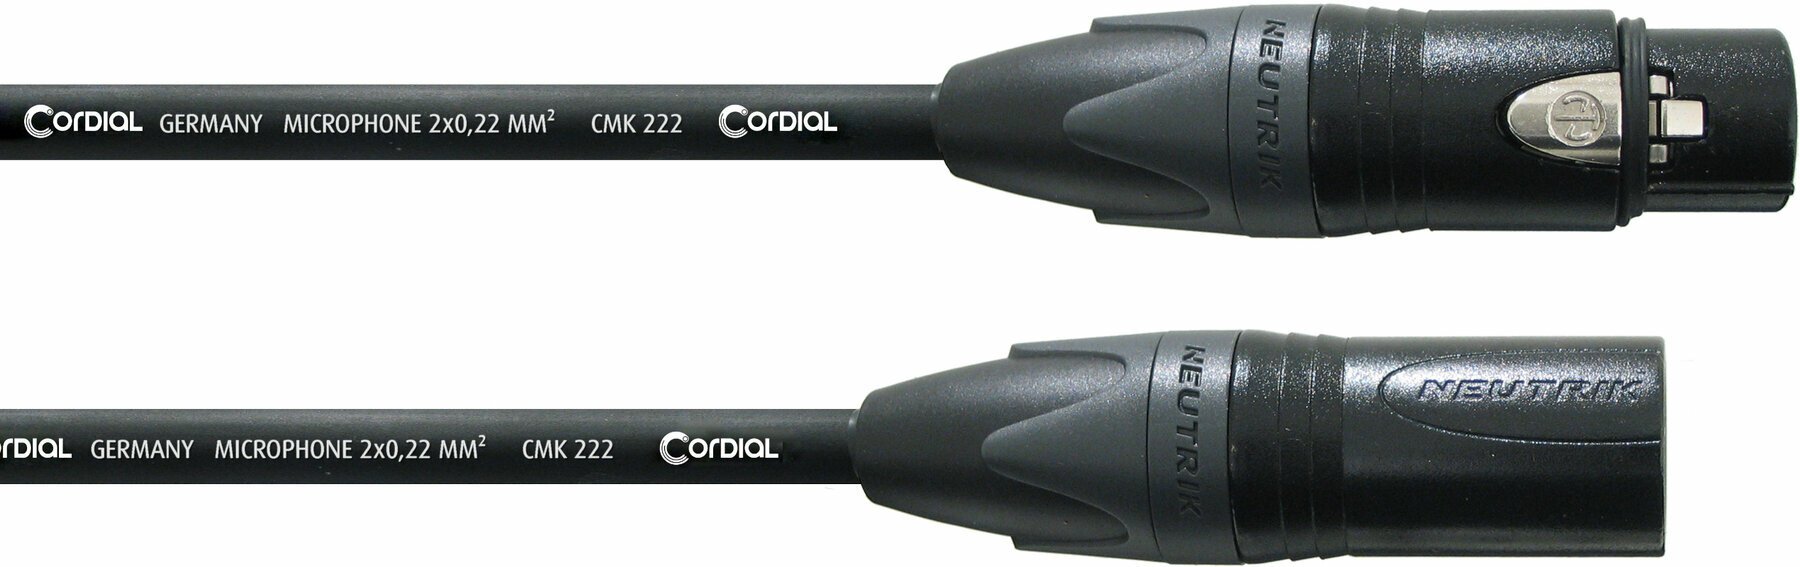 Mikrofonkabel Cordial CPM 5 FM Schwarz 5 m